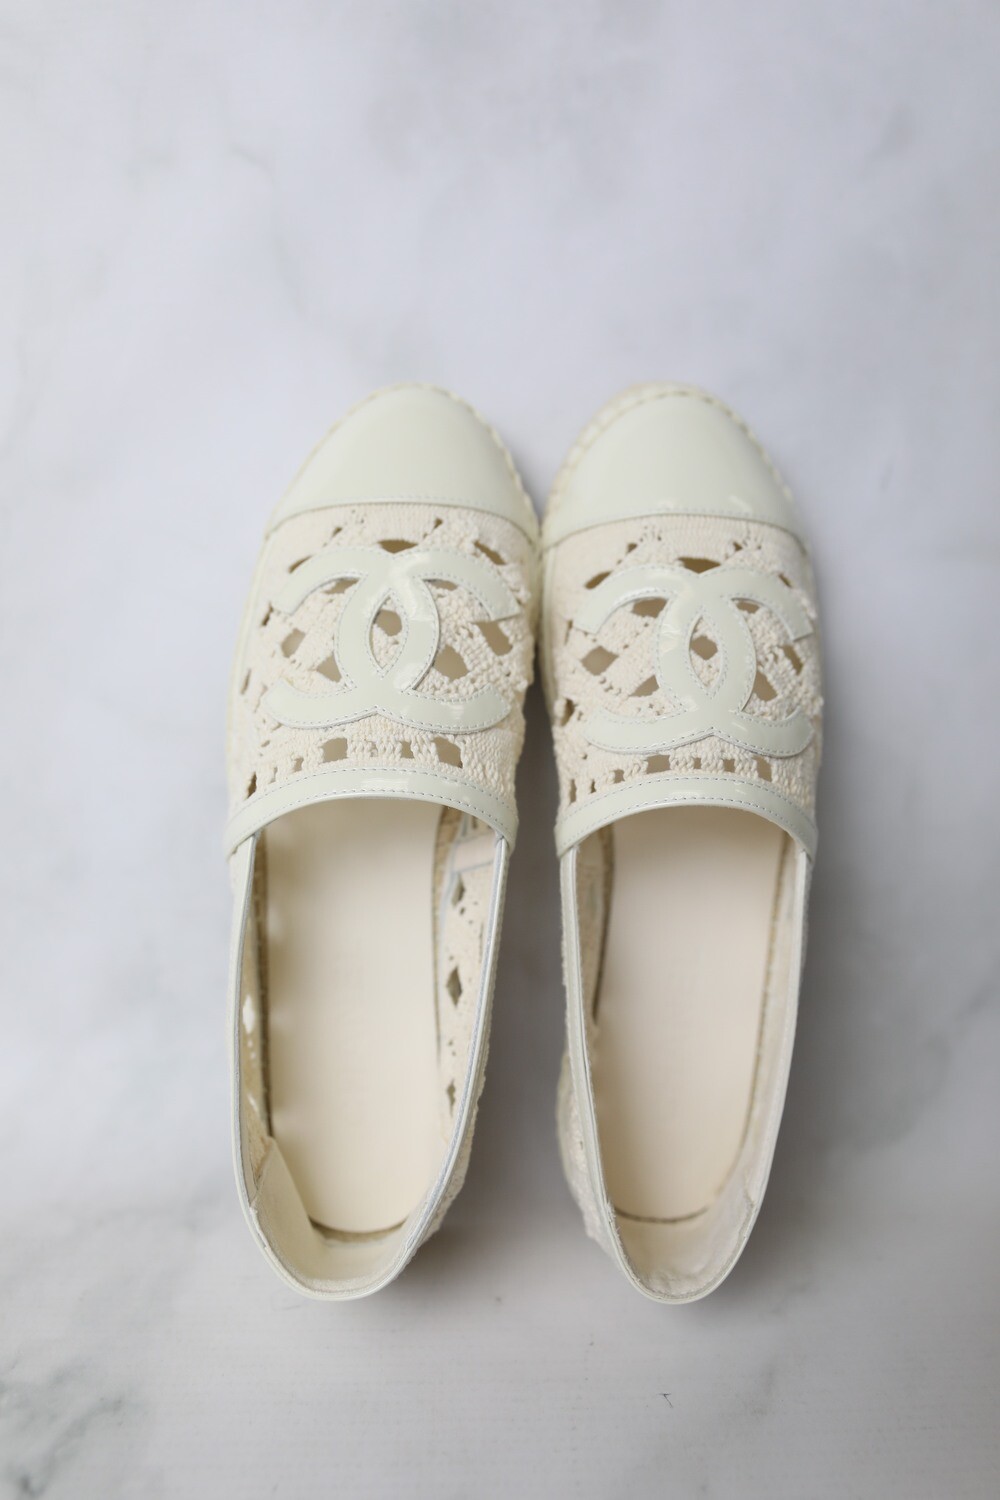 Chanel Shoes Espadrilles, White Crochet, Size 39, New in Box WA001